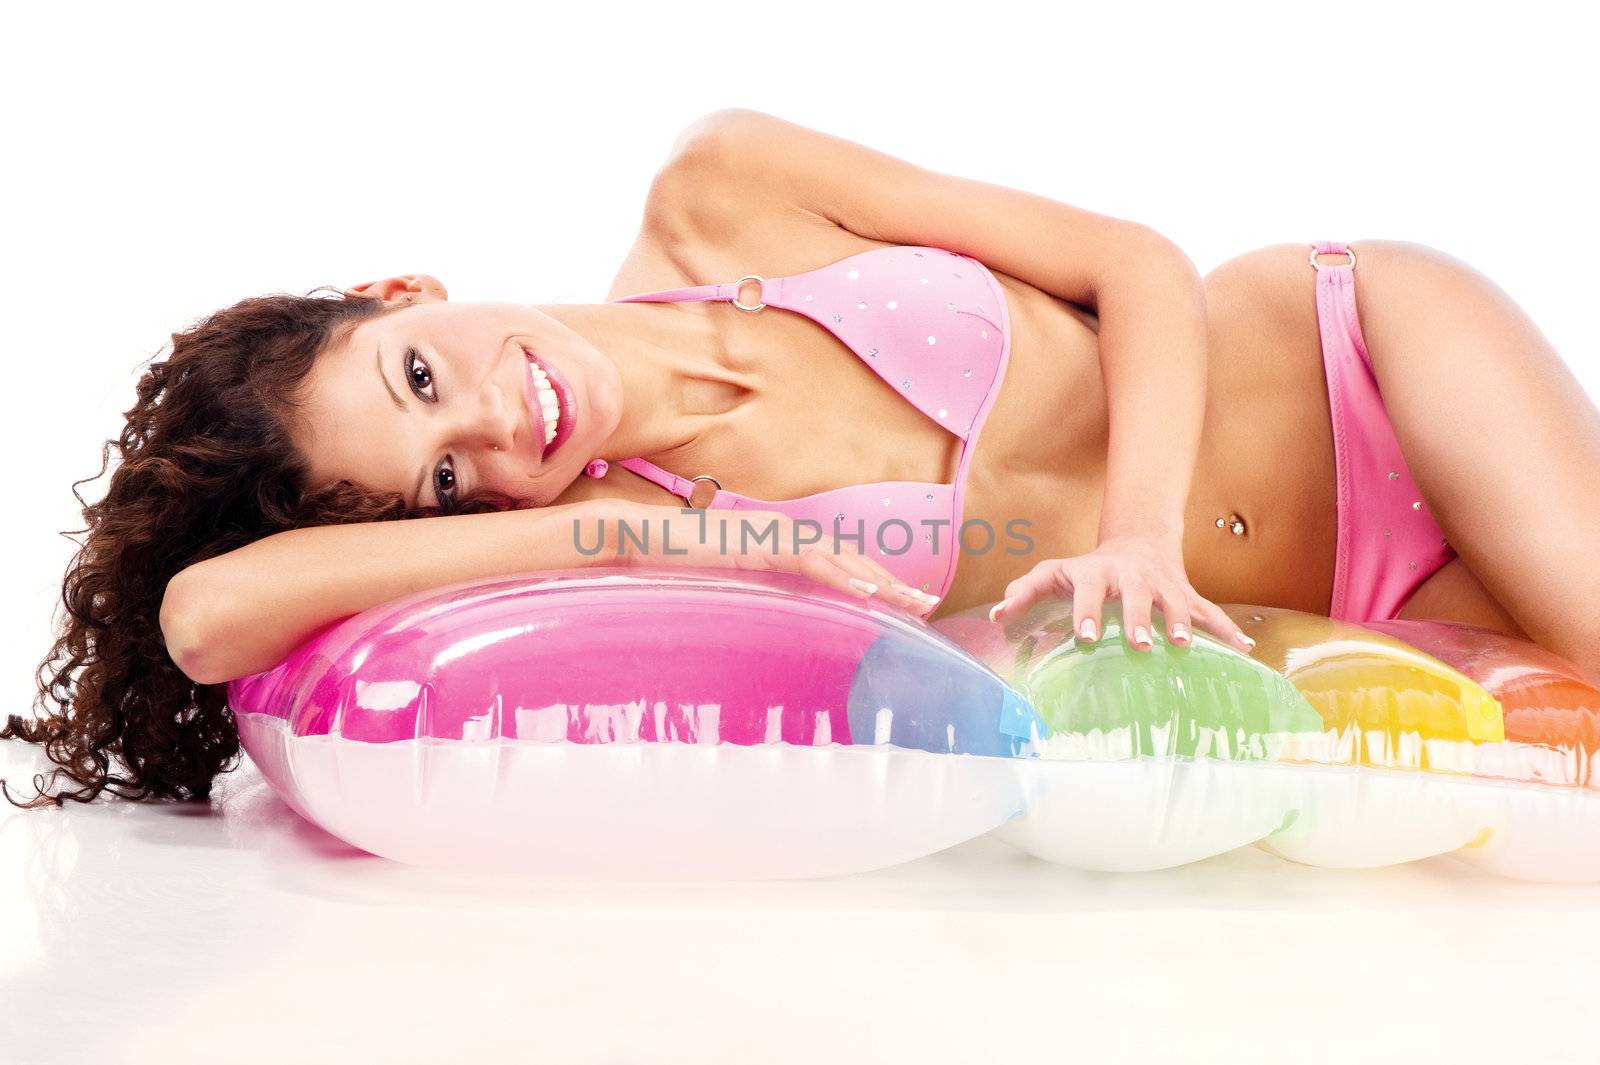 girl in bikini on air mattress by imarin